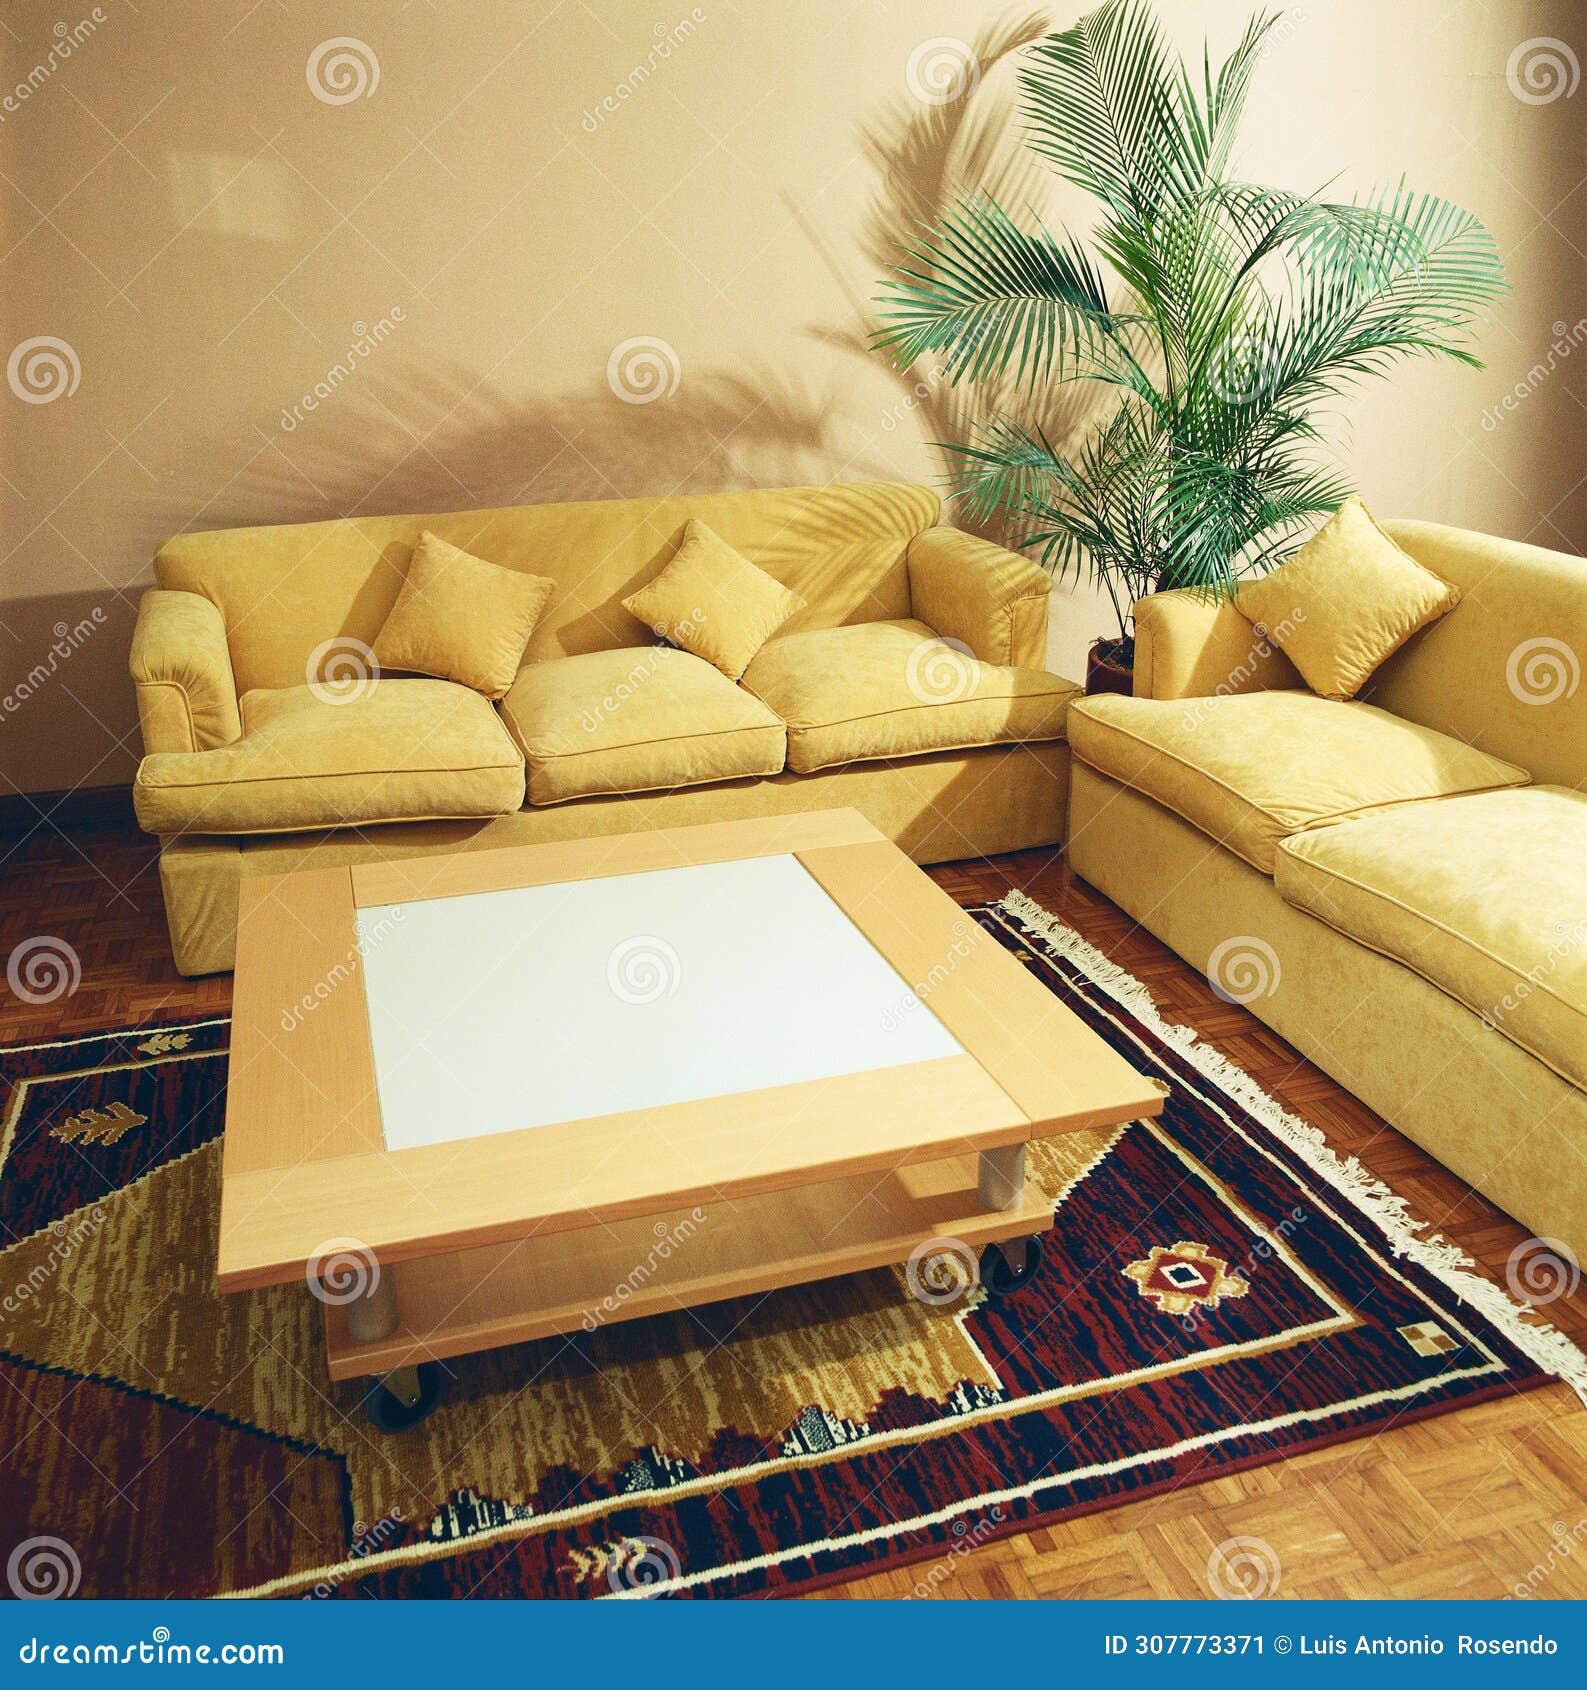 living room with carpet interior arquitecture decoration indoortable